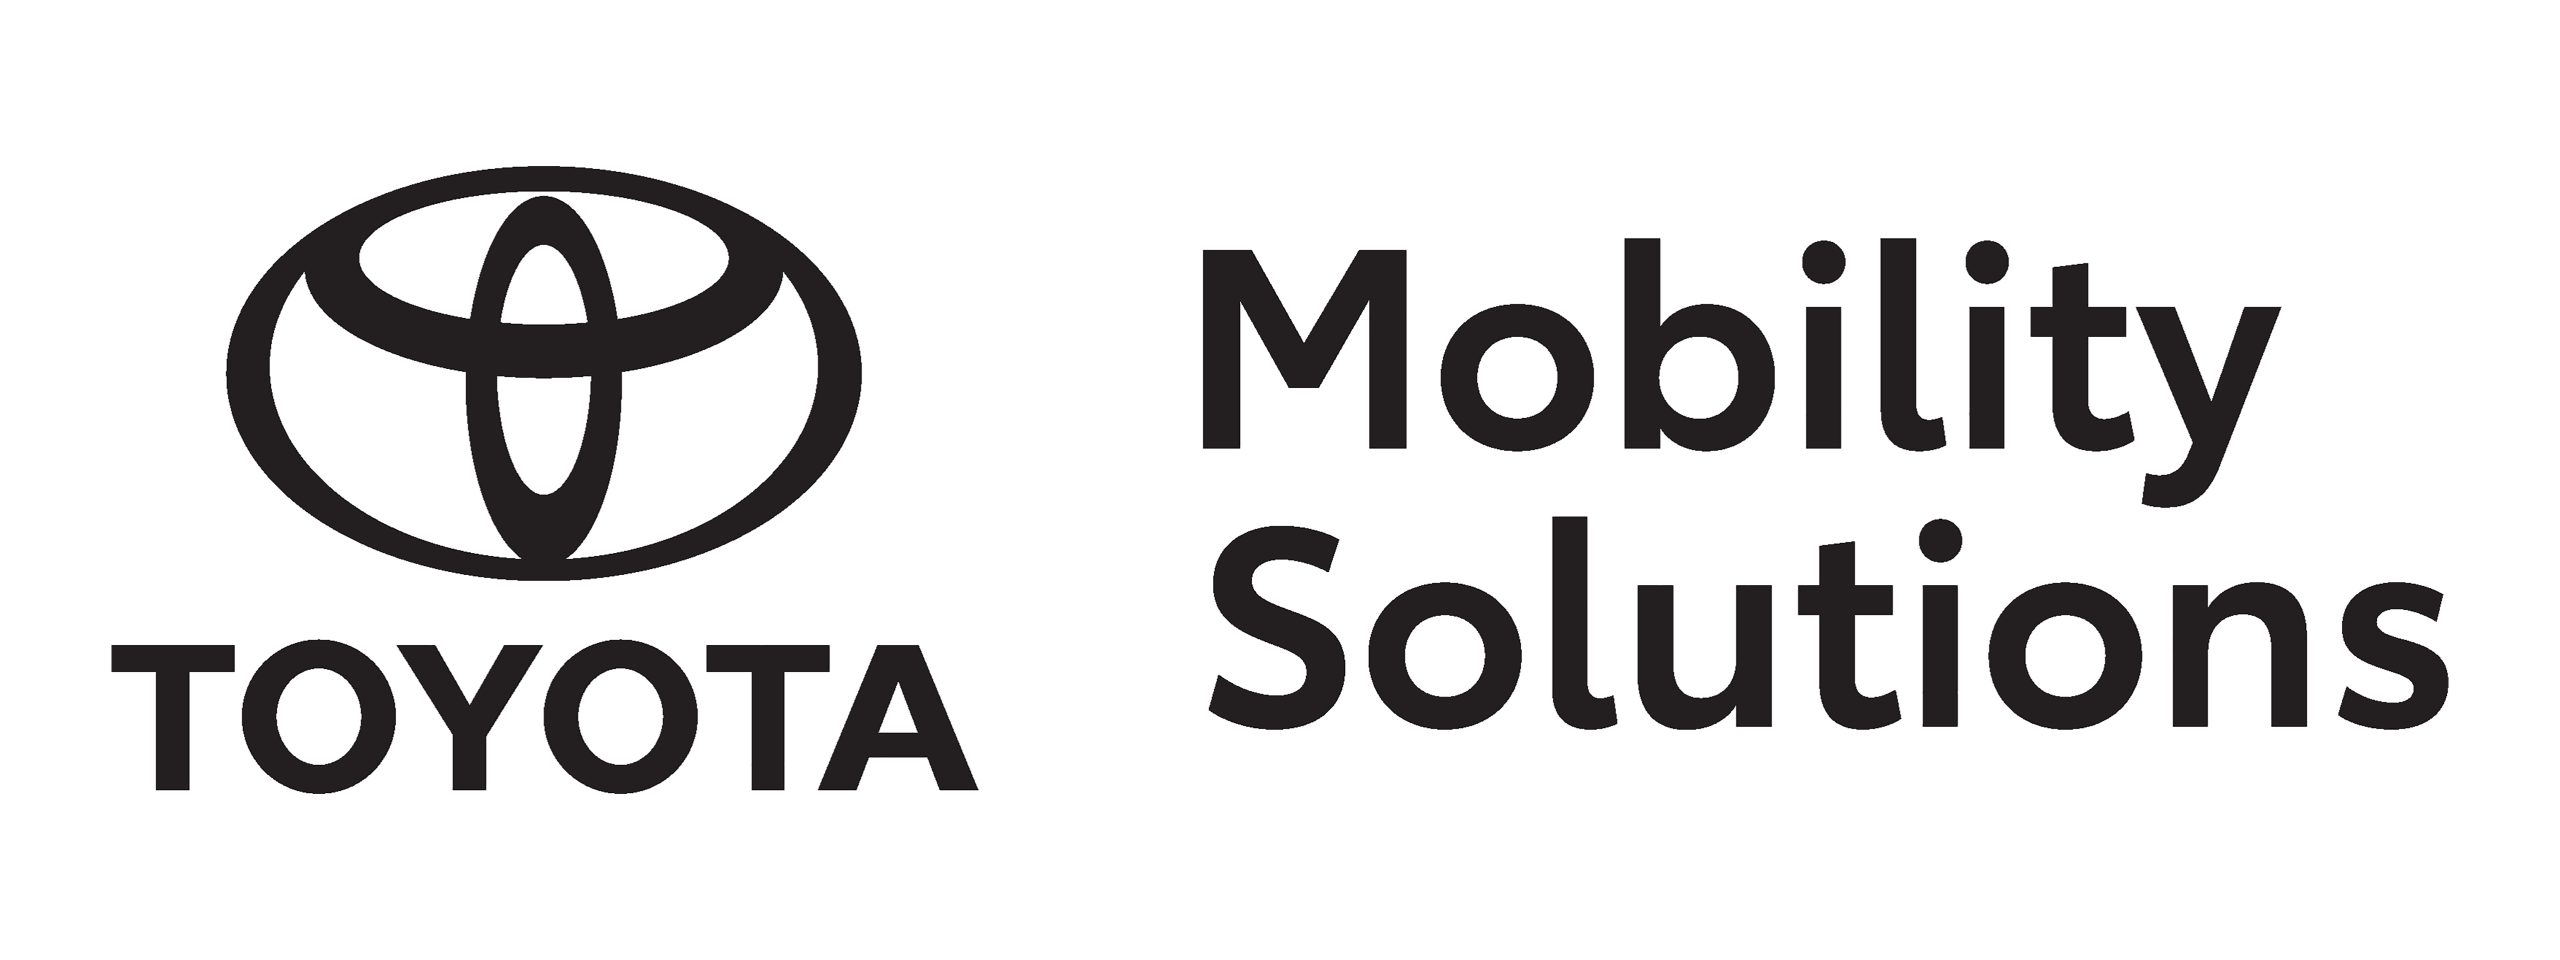 Toyota Mobility Solutions Company Logo